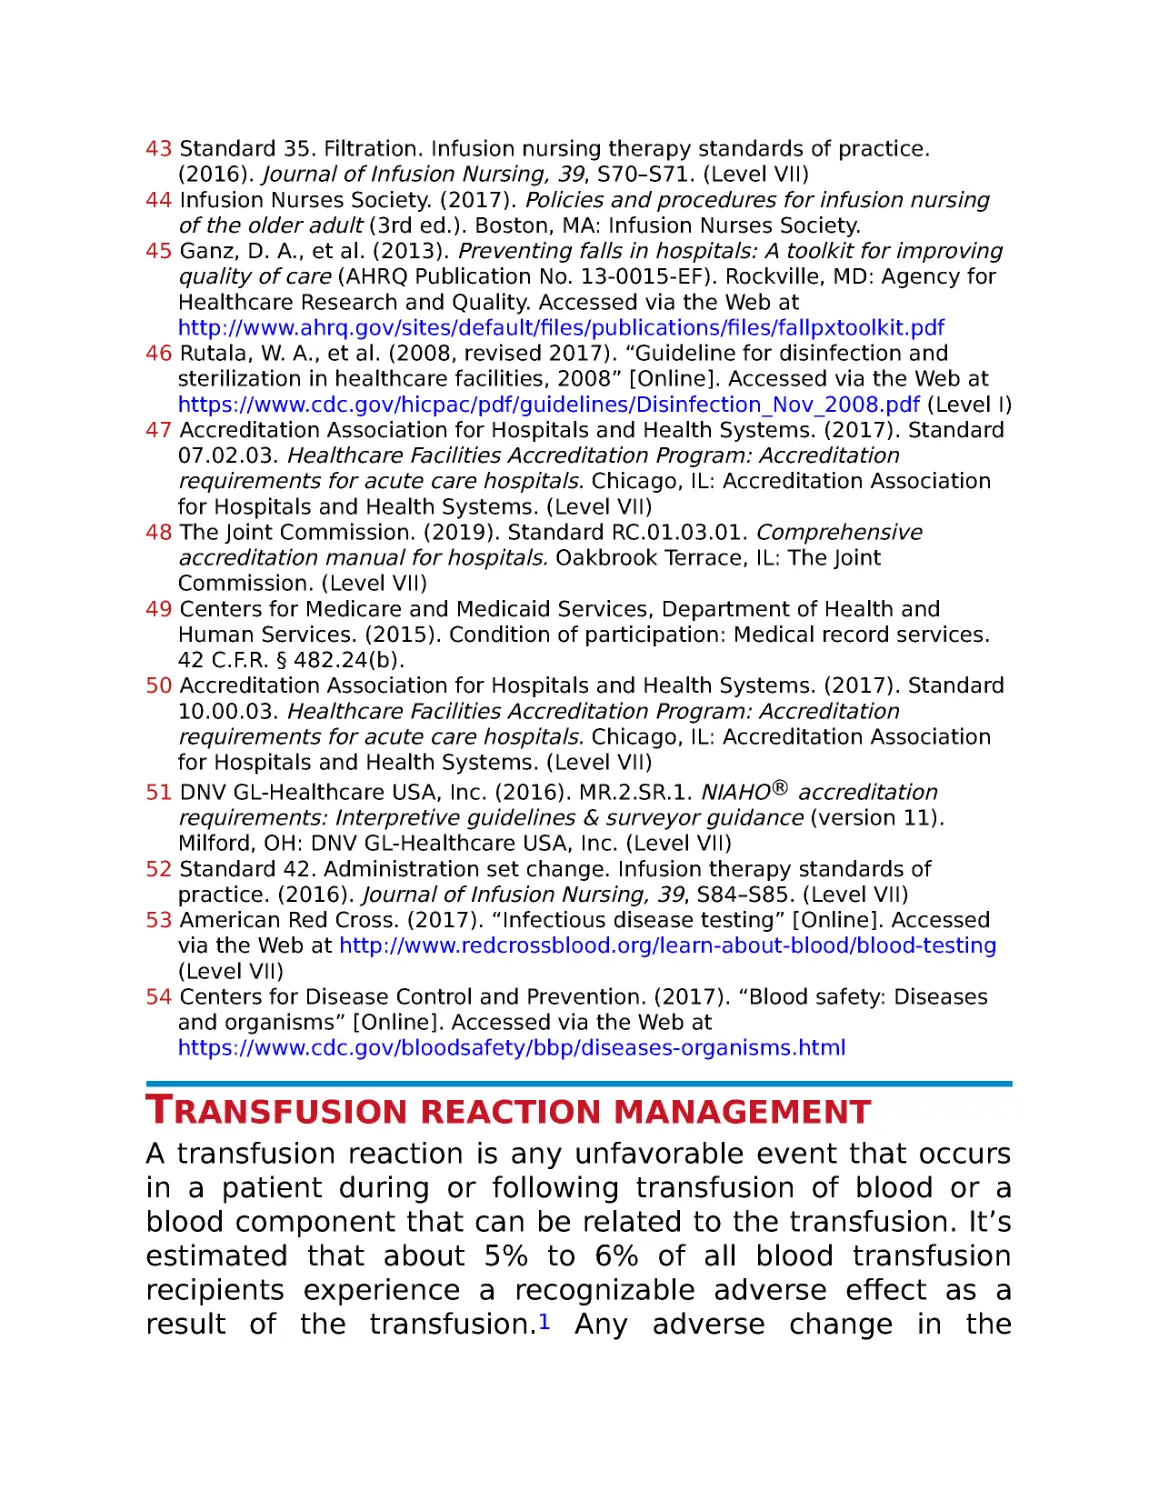 Transfusion reaction management